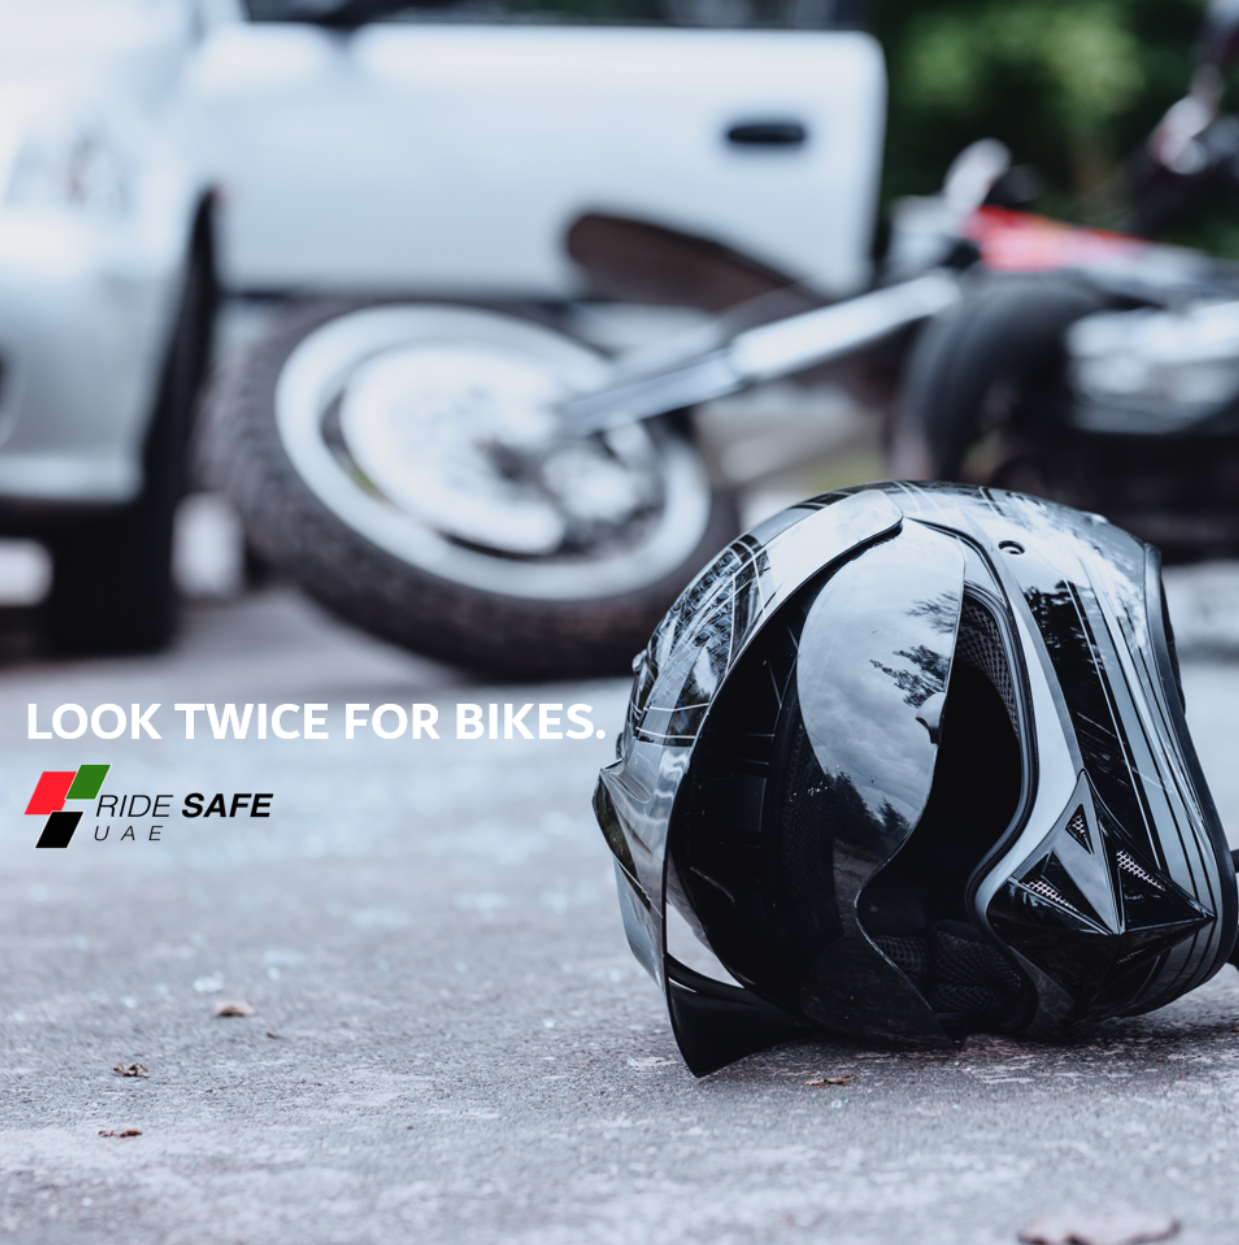 Ride Safe UAE